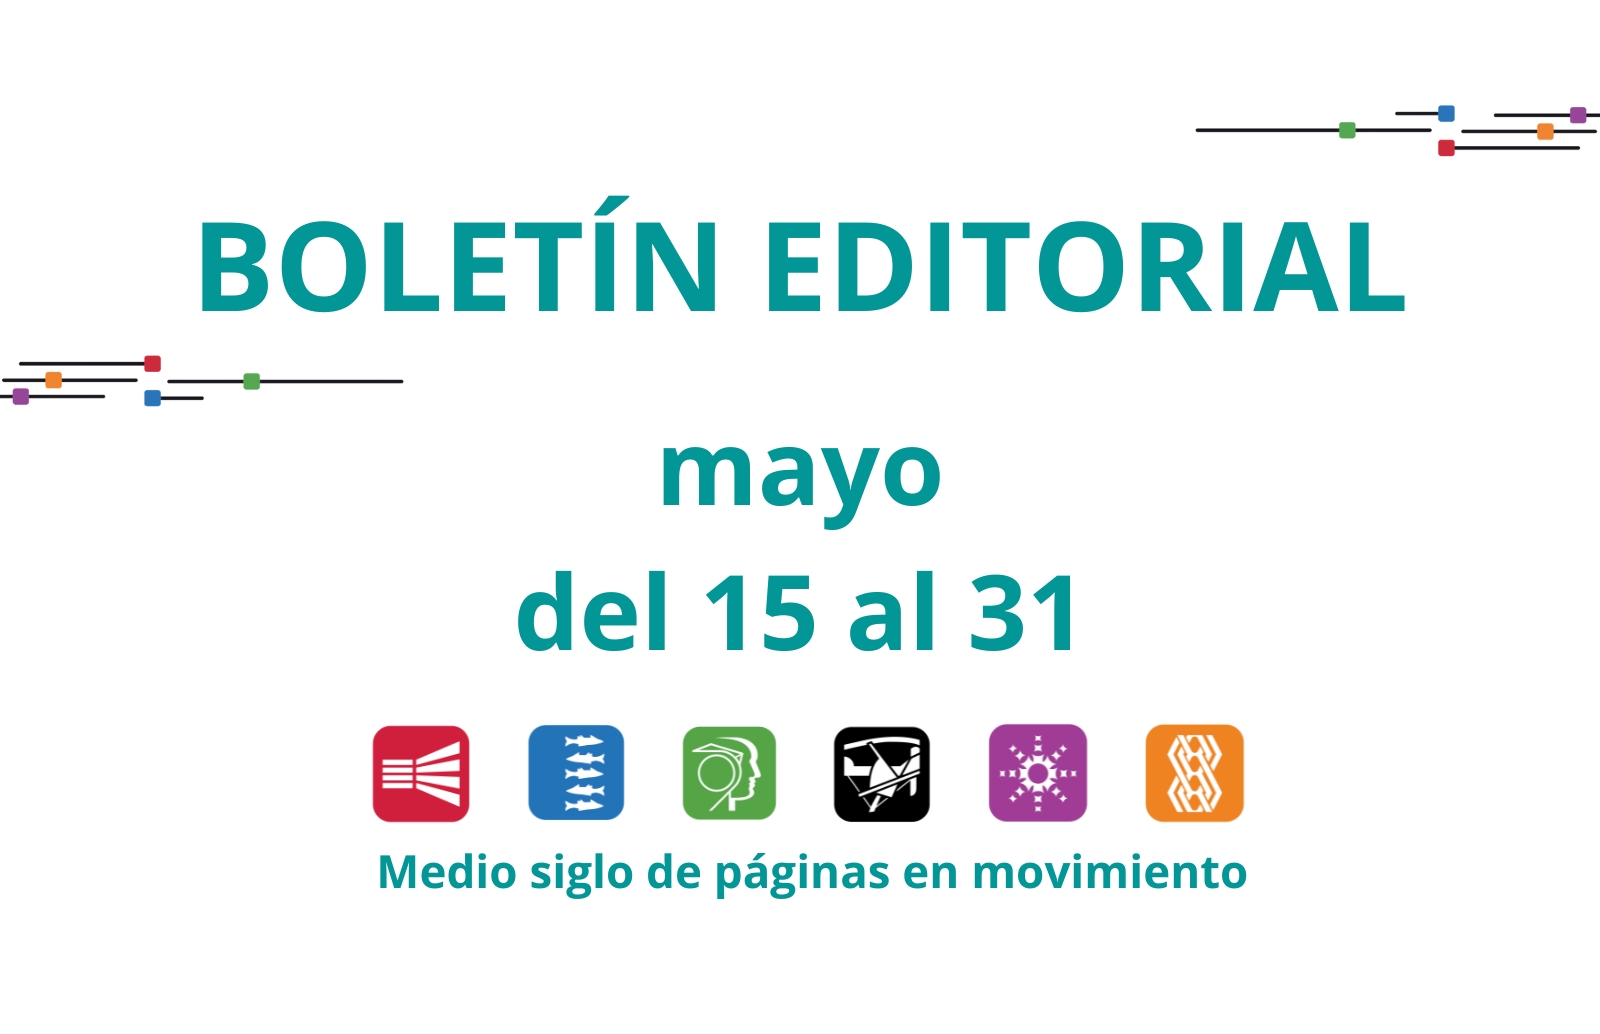 Boletín editorial LibrosUAM, núm. 20